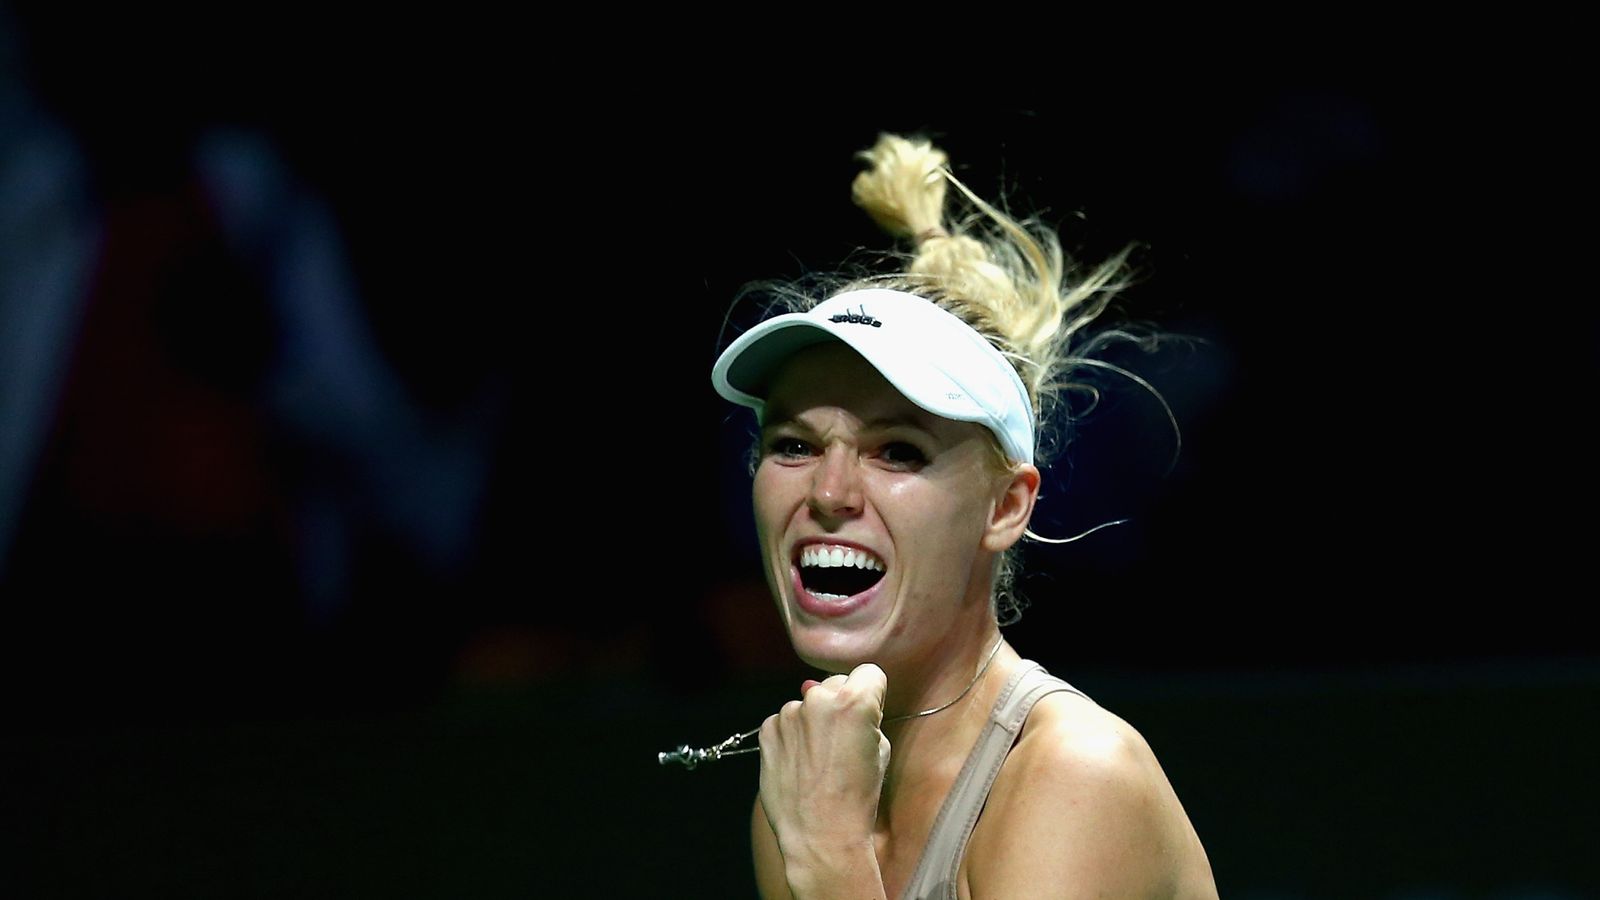 WTA Tour Finals Caroline Wozniacki beats Maria Sharapova in opener